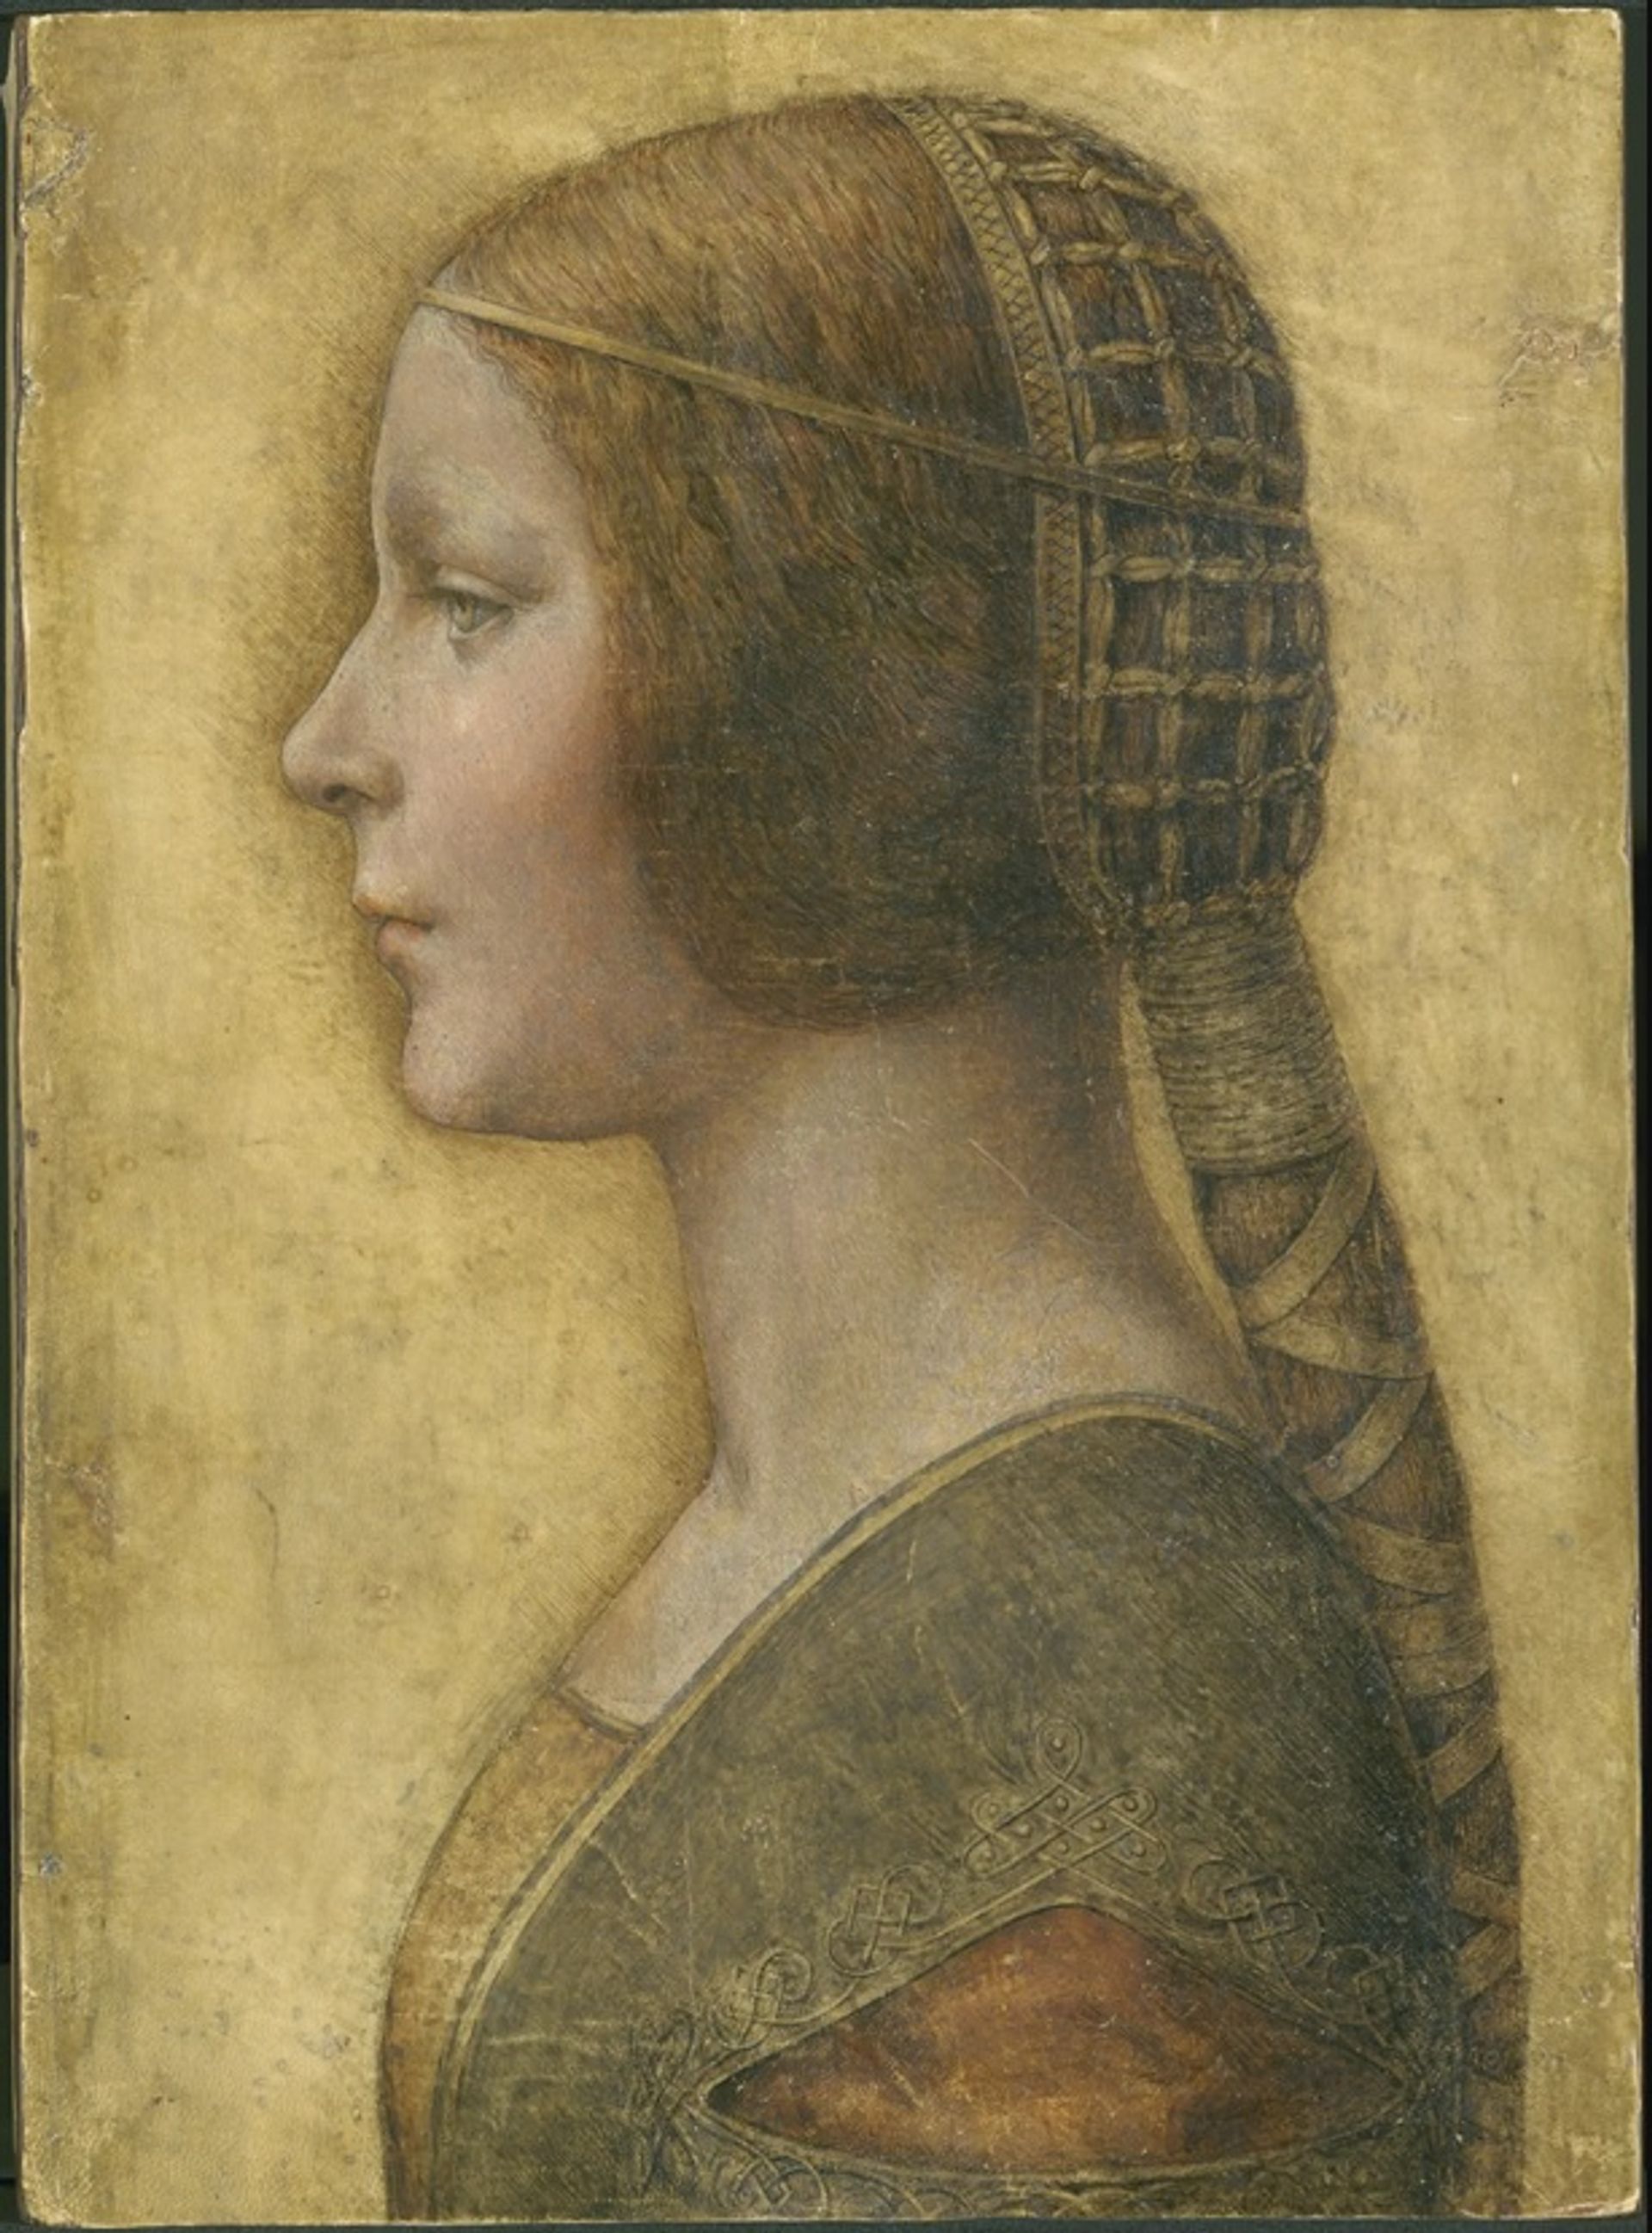 La Bella Principessa של (אולי) ליאונרדו דה וינצ'י (1495-96) מאוחסן בכספת שוויצרית אבל גרסת NFT הצליחה לחמוק 

Lumiere Technology